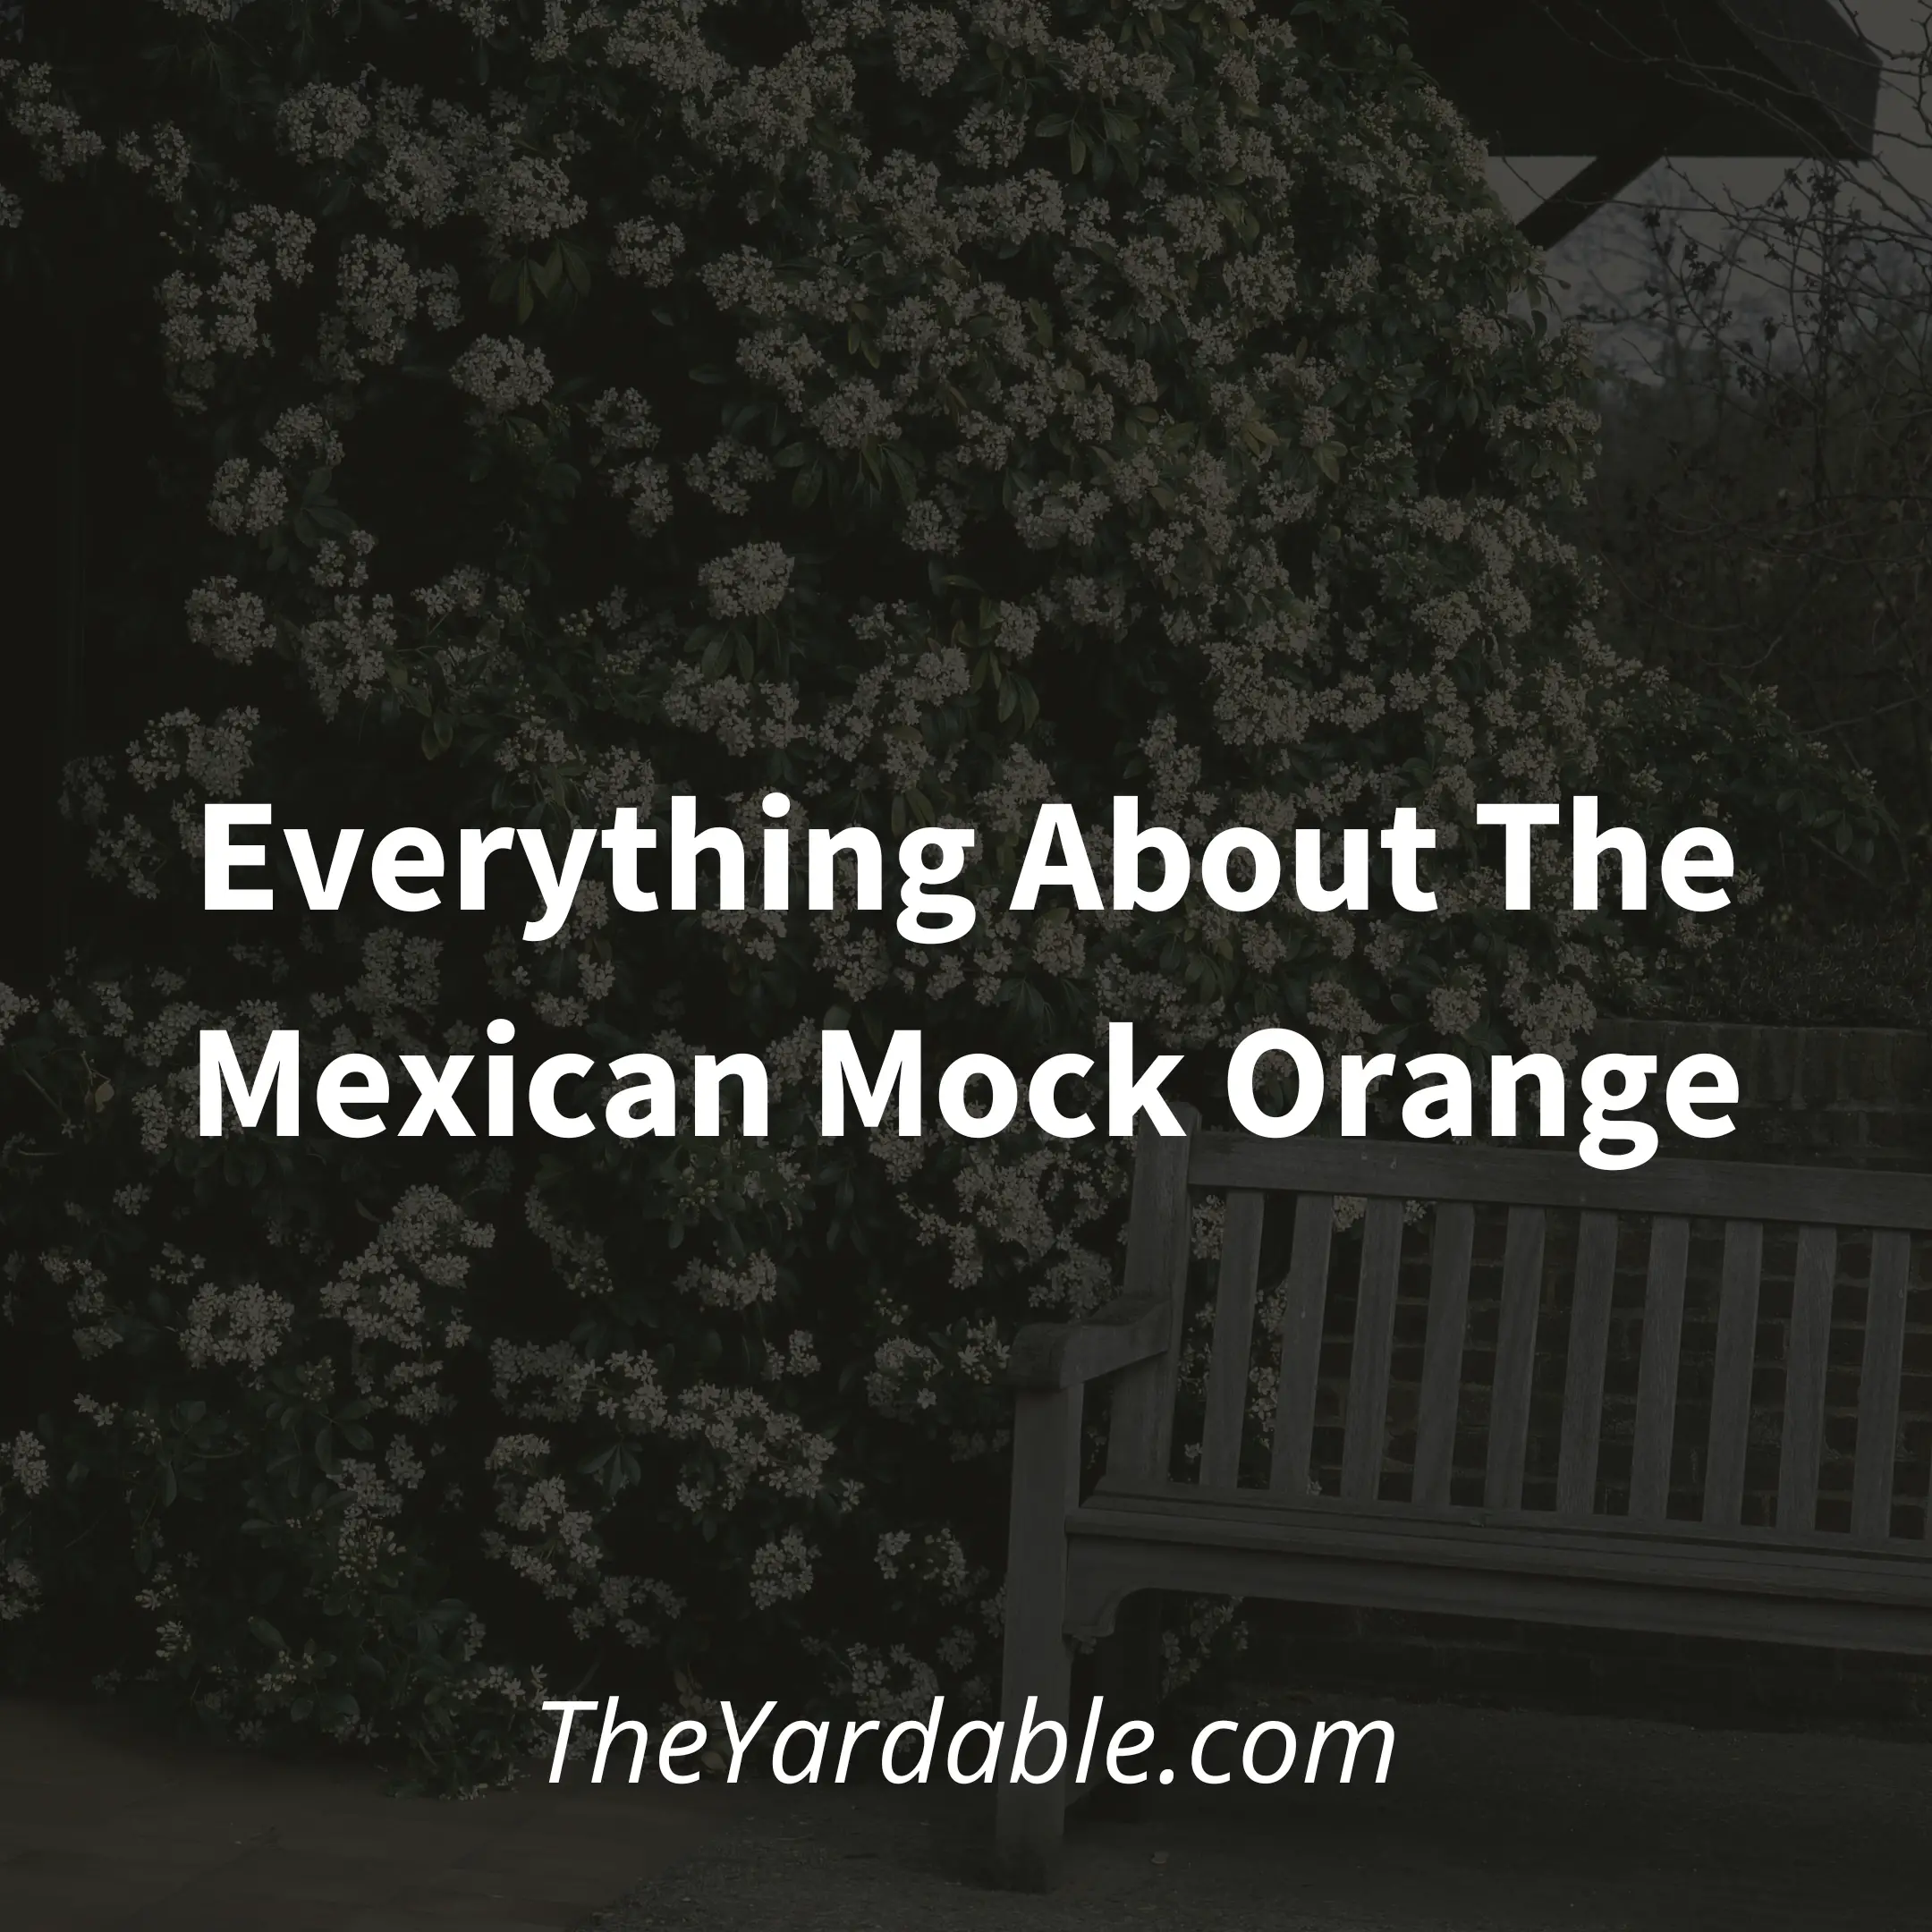 Mexican Mock Orange: Everything About The Choisya Ternata